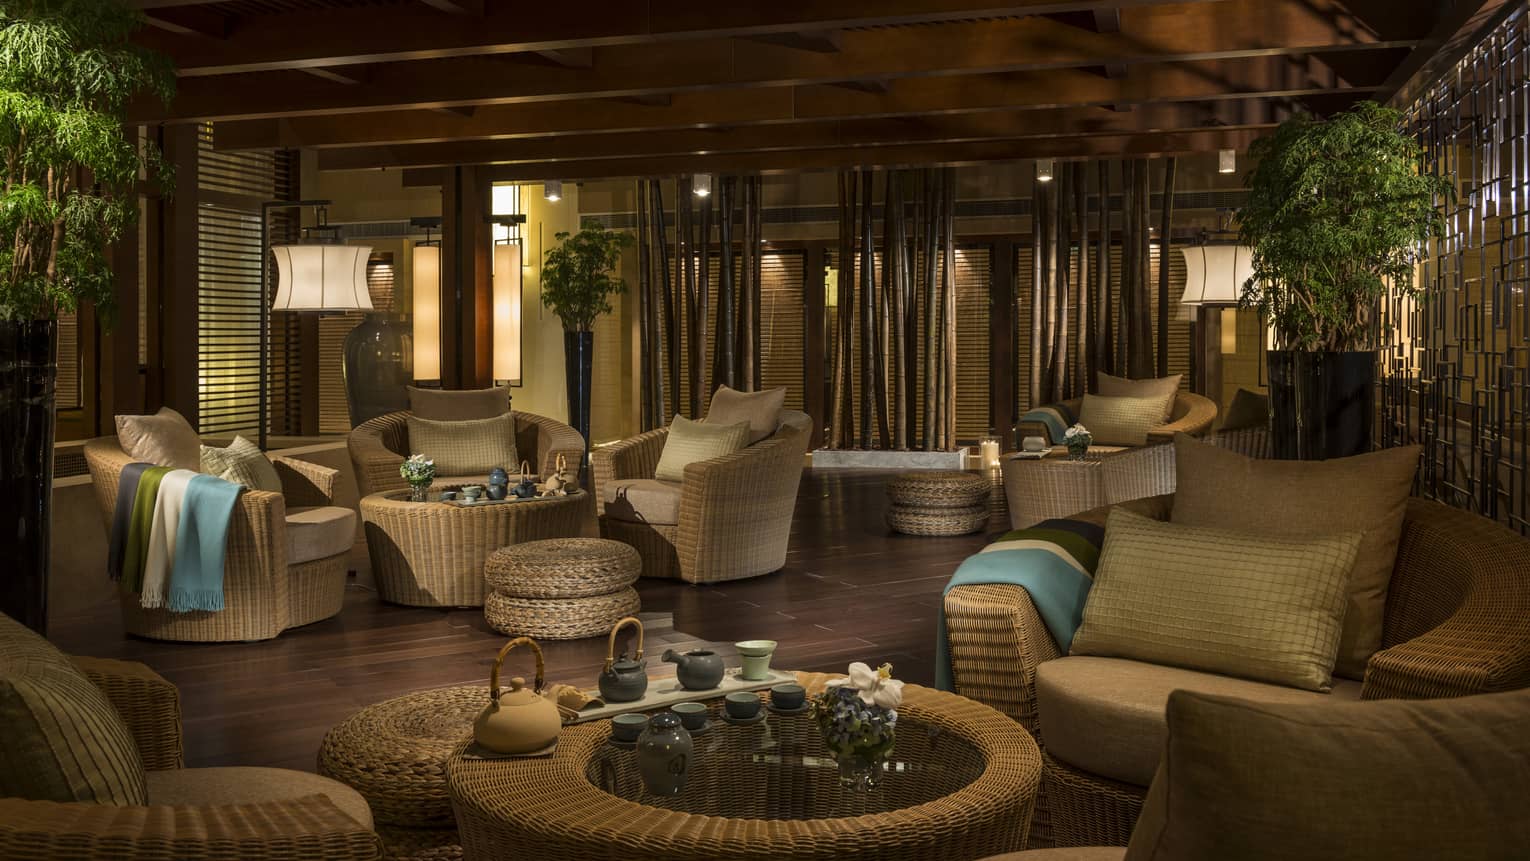 Dimly-lit Tea Garden lounge with light wicker furniture, tea service on tables